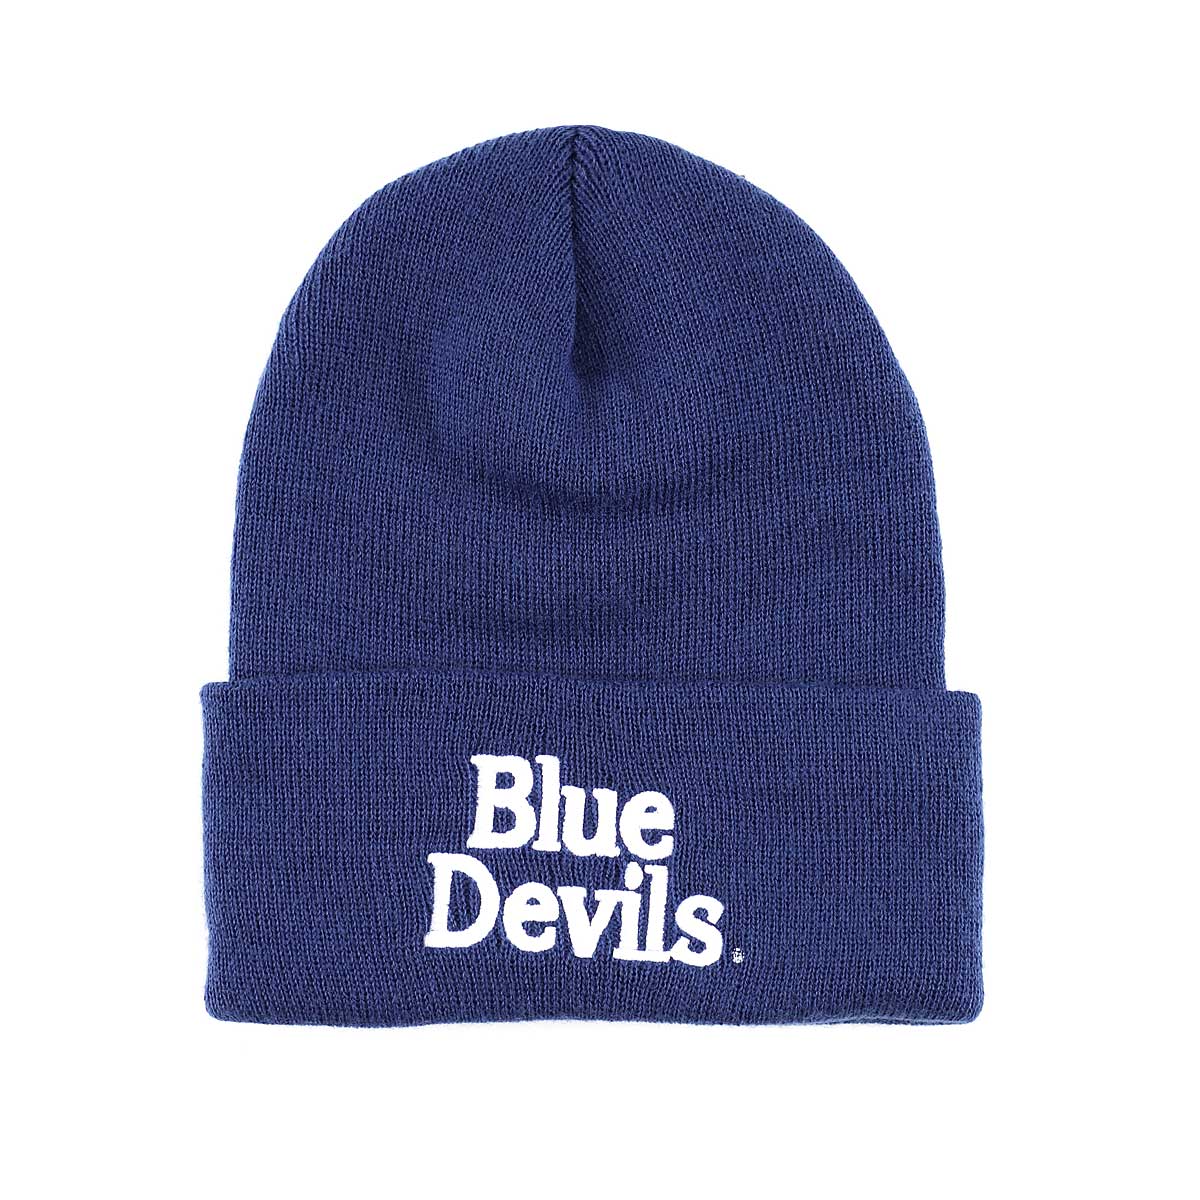 Mitchell And Ness Ncaa Duke Blue Devils Monochrome Team Cuff Knit Beanie, Navy - White